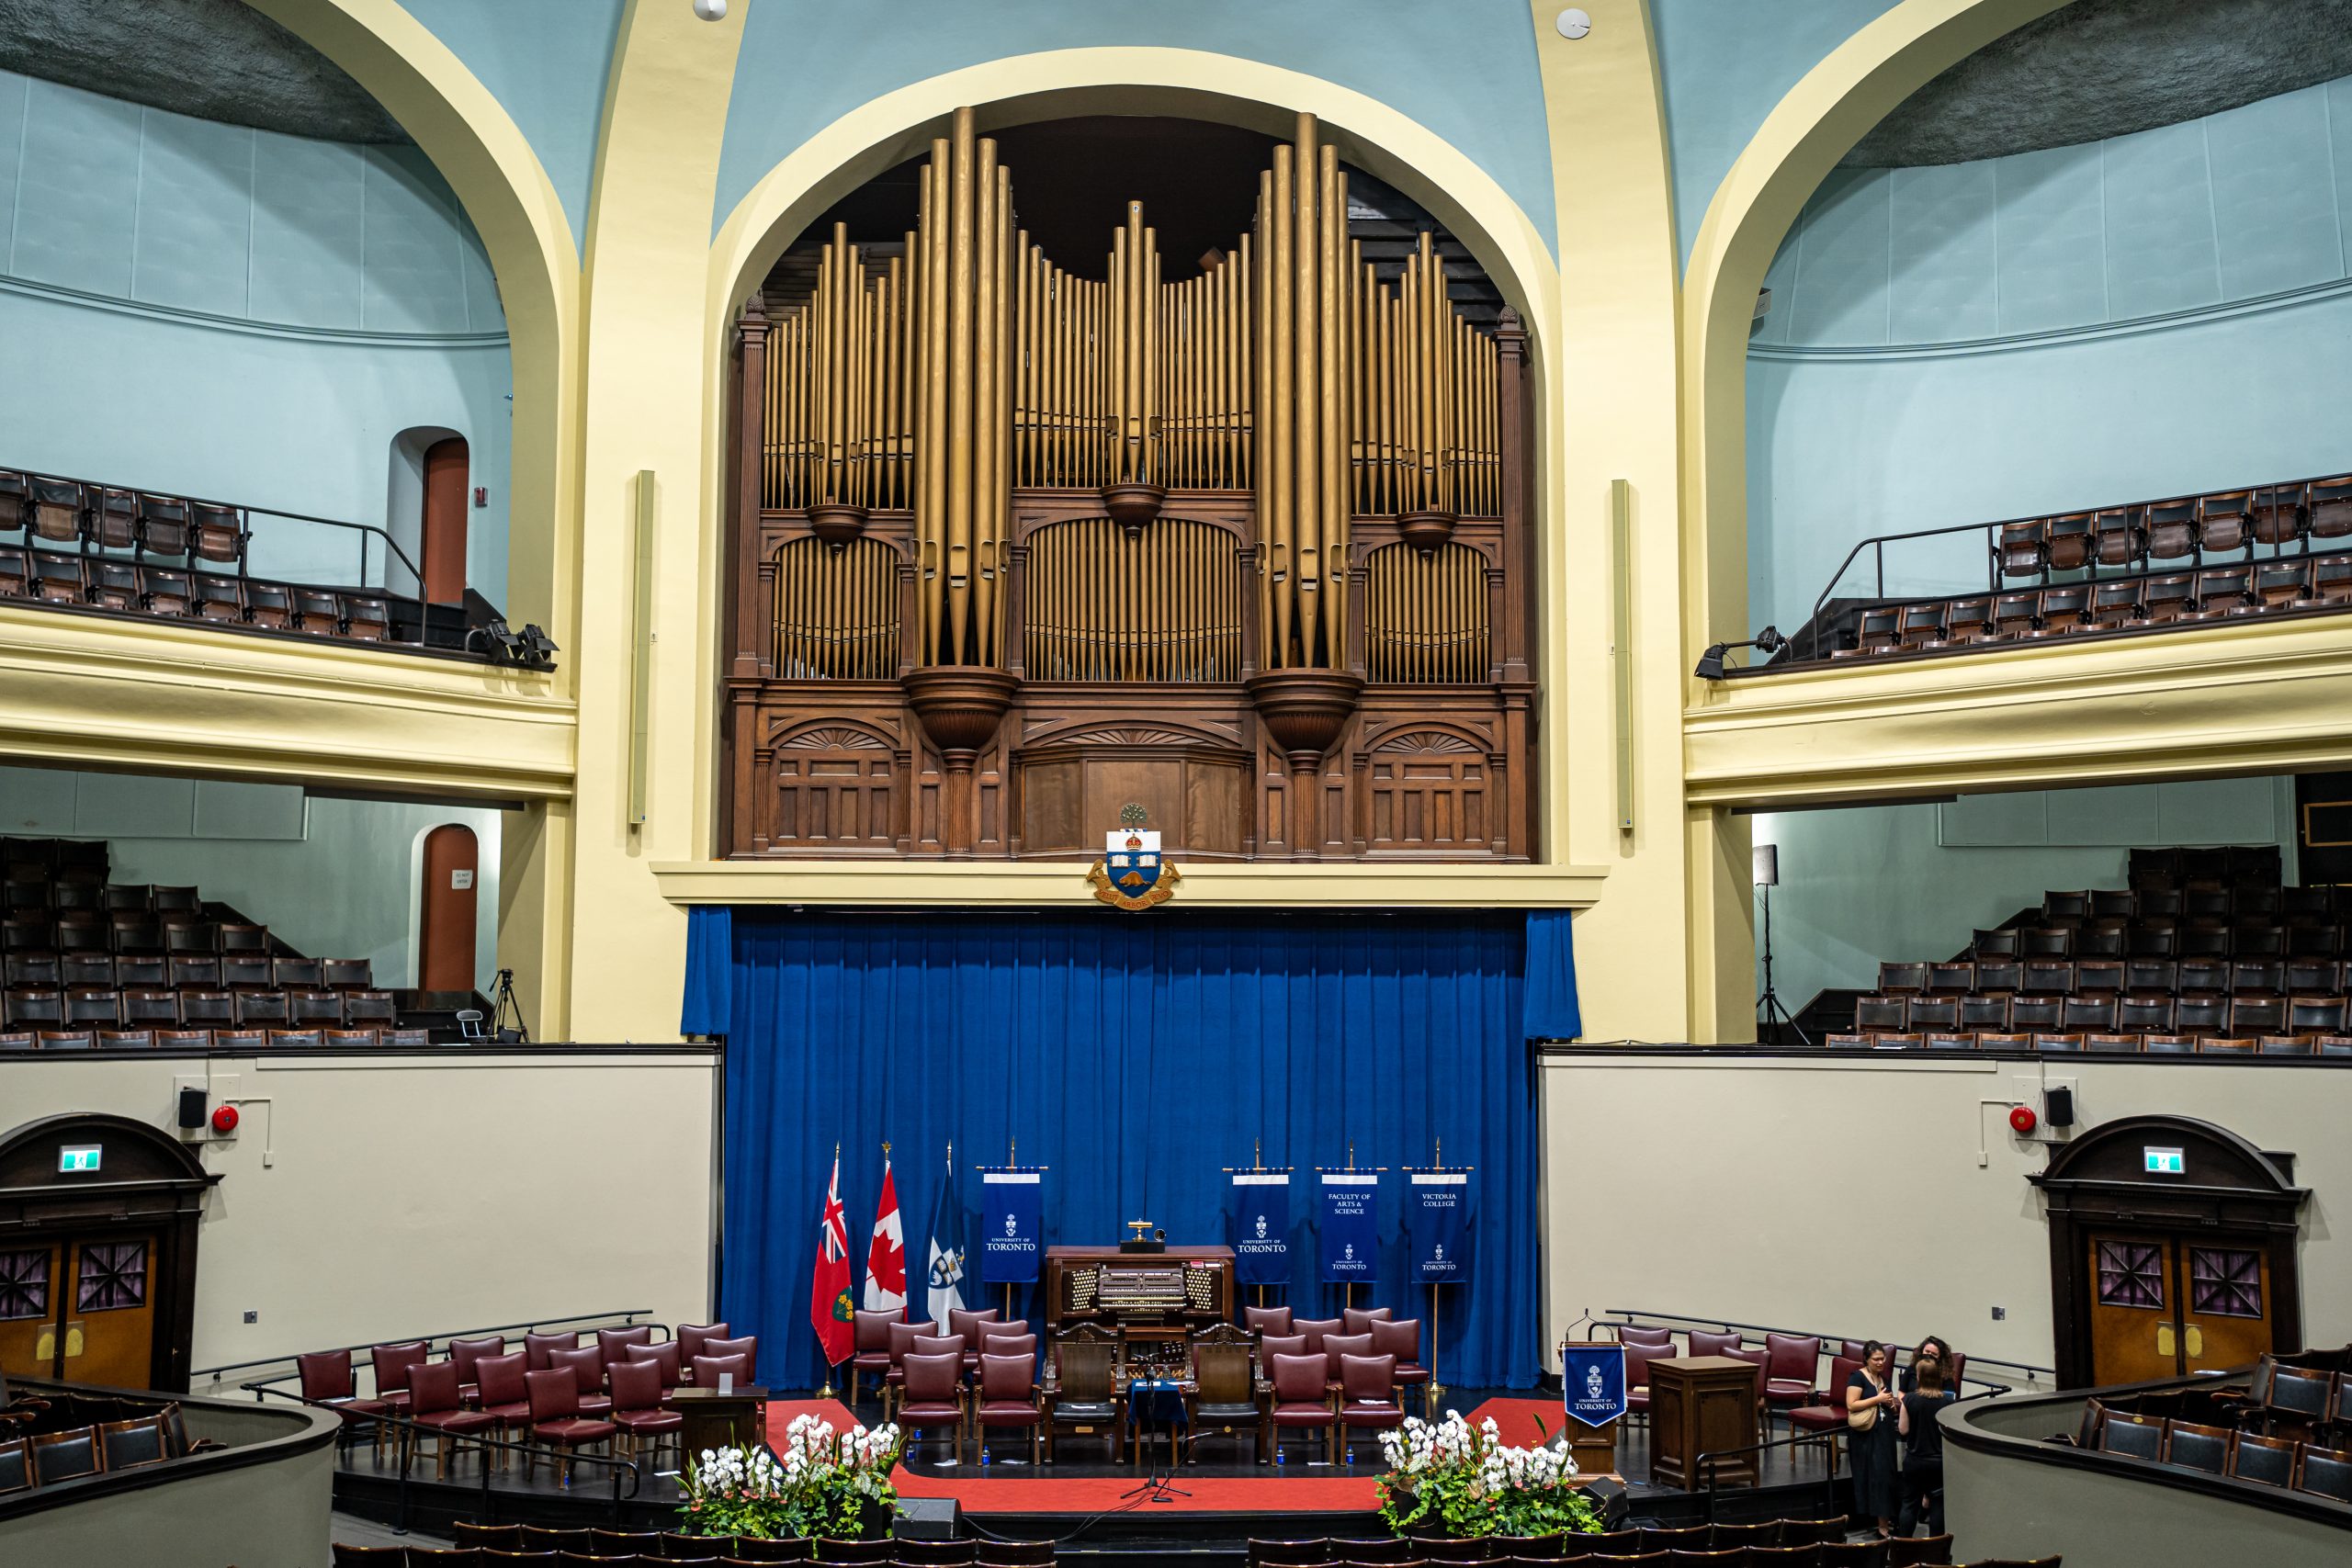 Casavant pipe organ at Convocation Hall